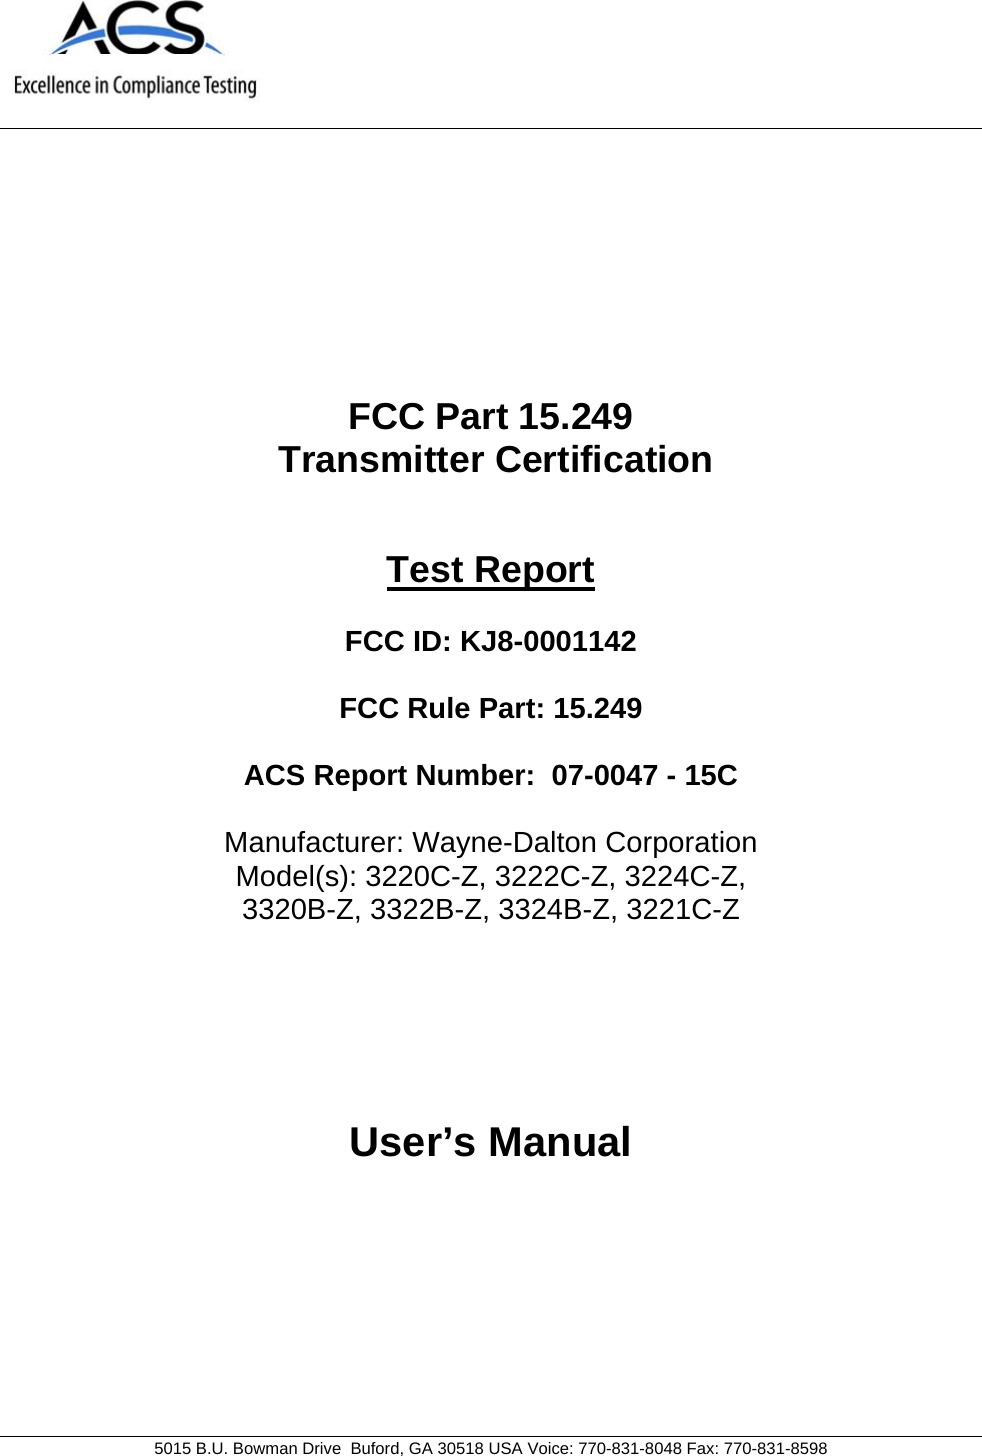   5015 B.U. Bowman Drive  Buford, GA 30518 USA Voice: 770-831-8048 Fax: 770-831-8598   FCC Part 15.249  Transmitter Certification   Test Report  FCC ID: KJ8-0001142   FCC Rule Part: 15.249  ACS Report Number:  07-0047 - 15C   Manufacturer: Wayne-Dalton Corporation Model(s): 3220C-Z, 3222C-Z, 3224C-Z,  3320B-Z, 3322B-Z, 3324B-Z, 3221C-Z     User’s Manual 